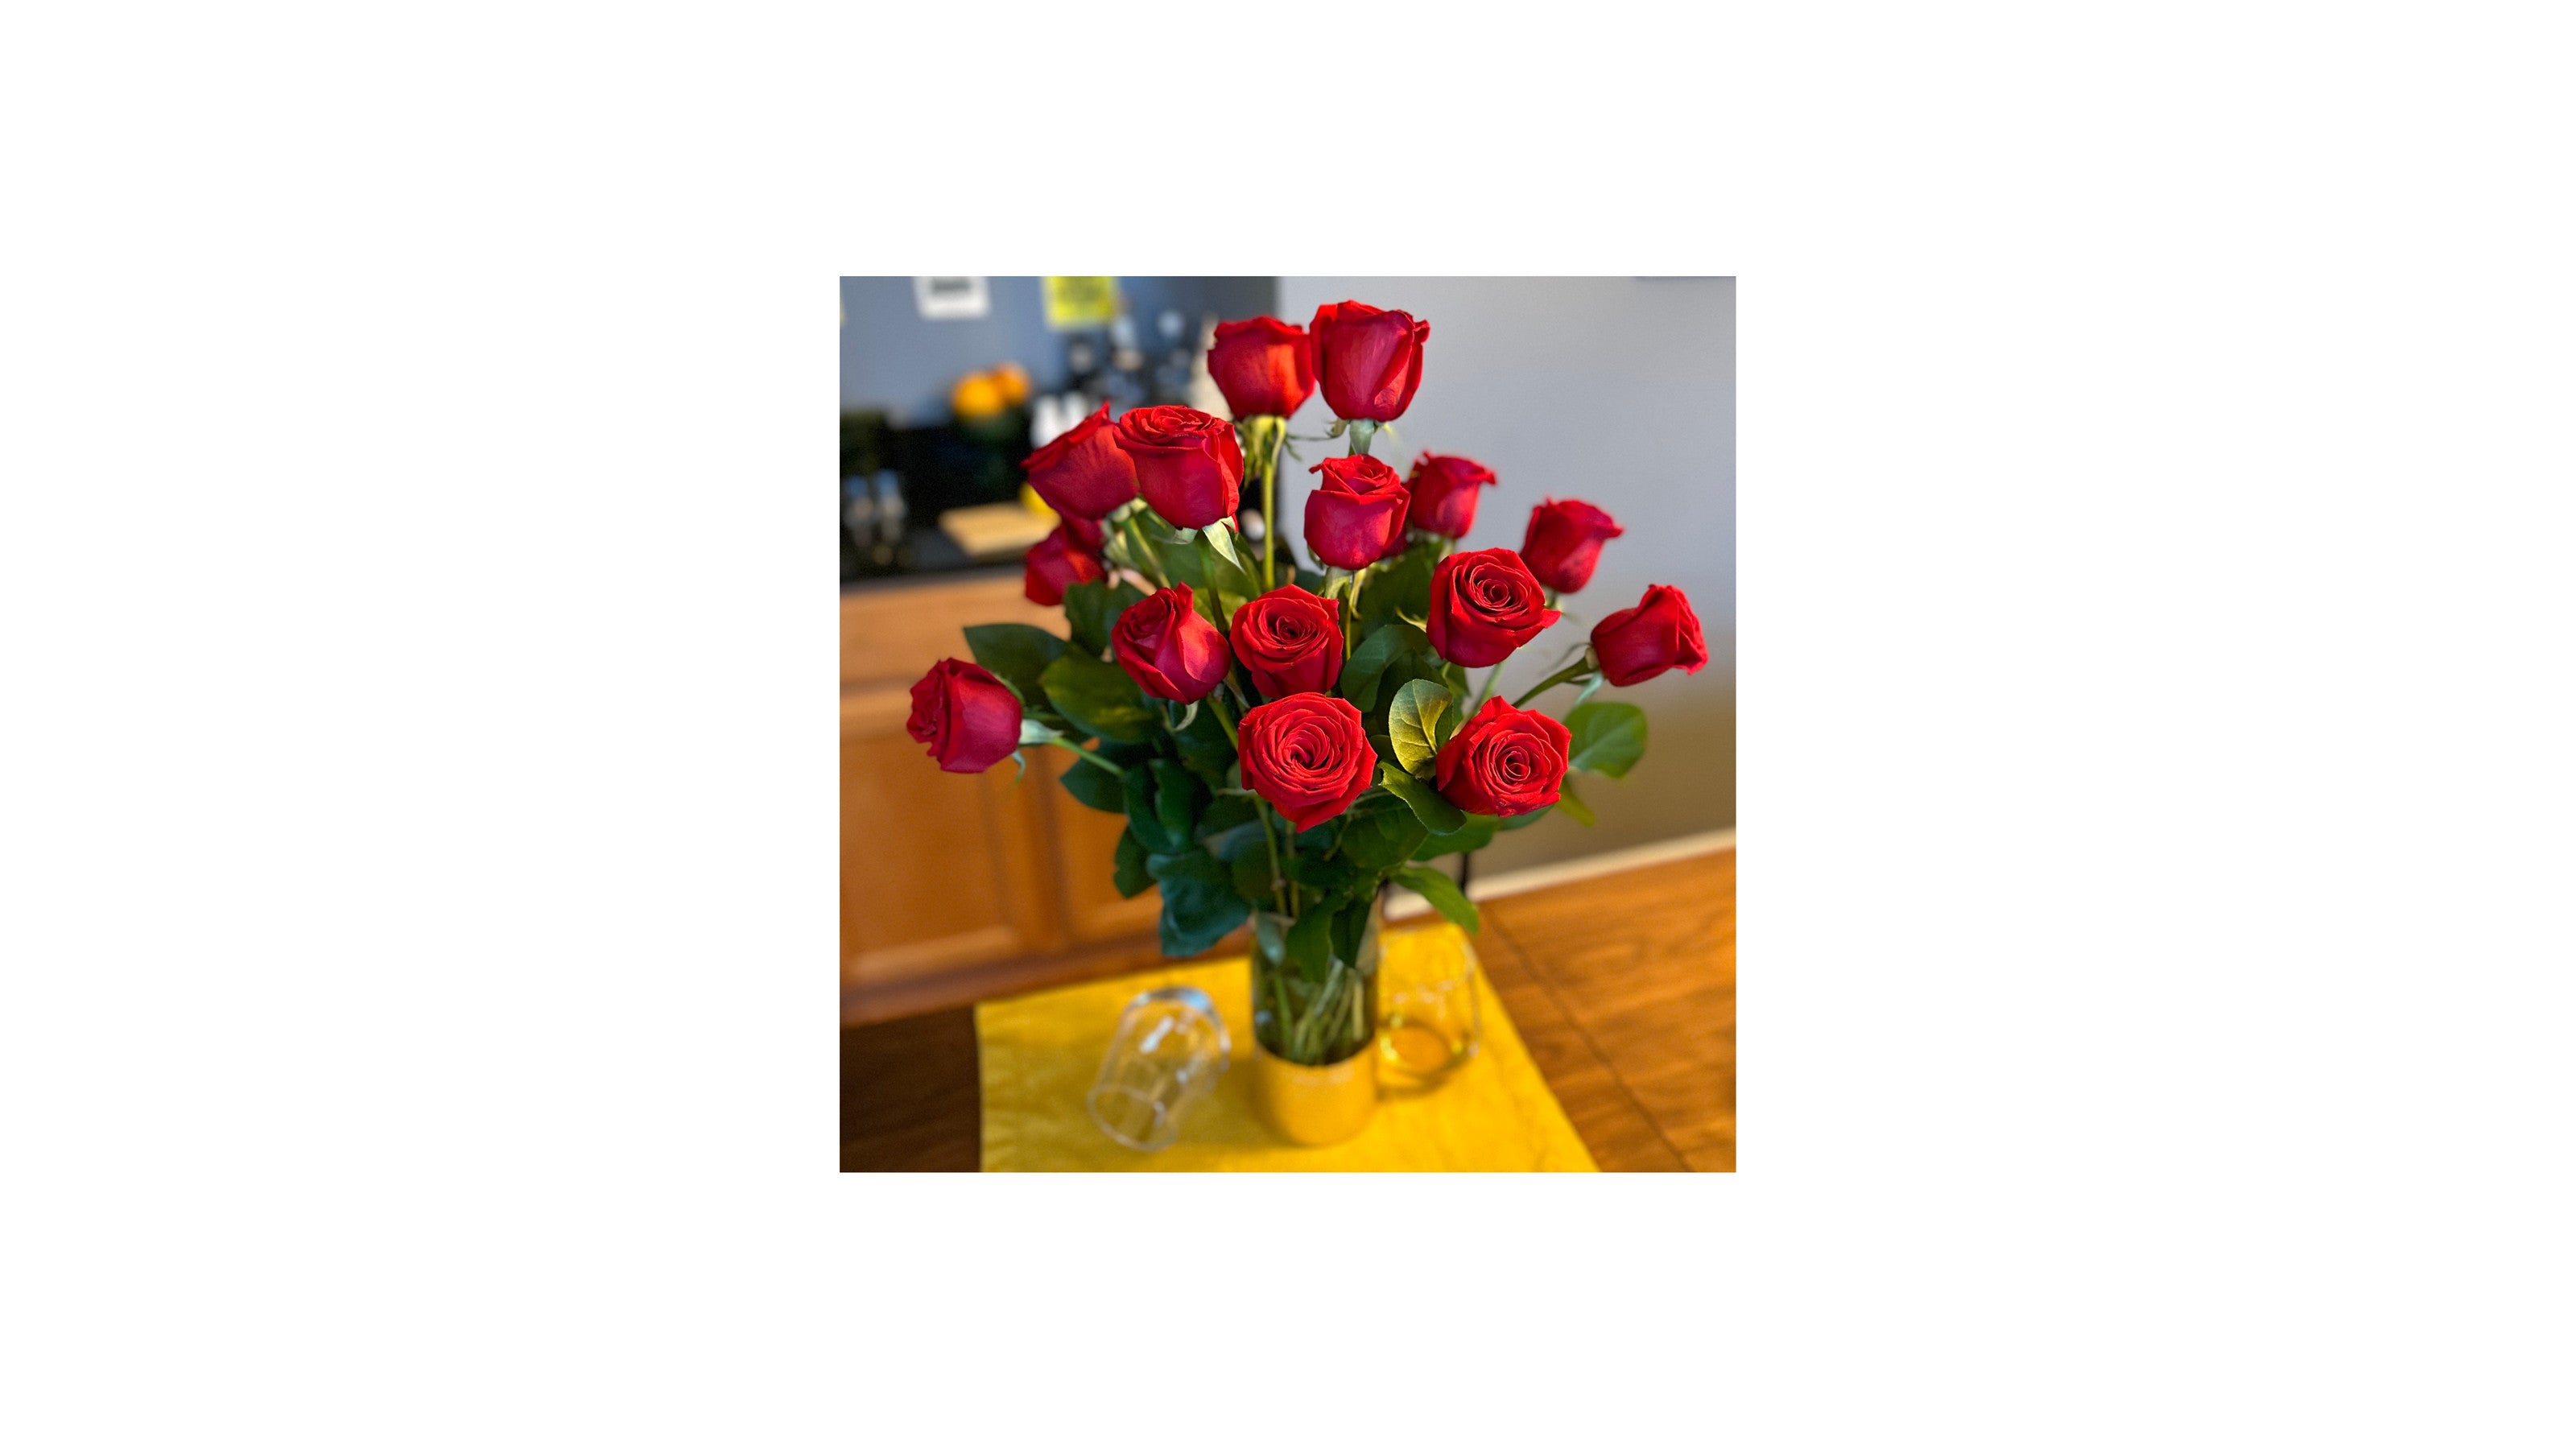 red dead single rose in vase